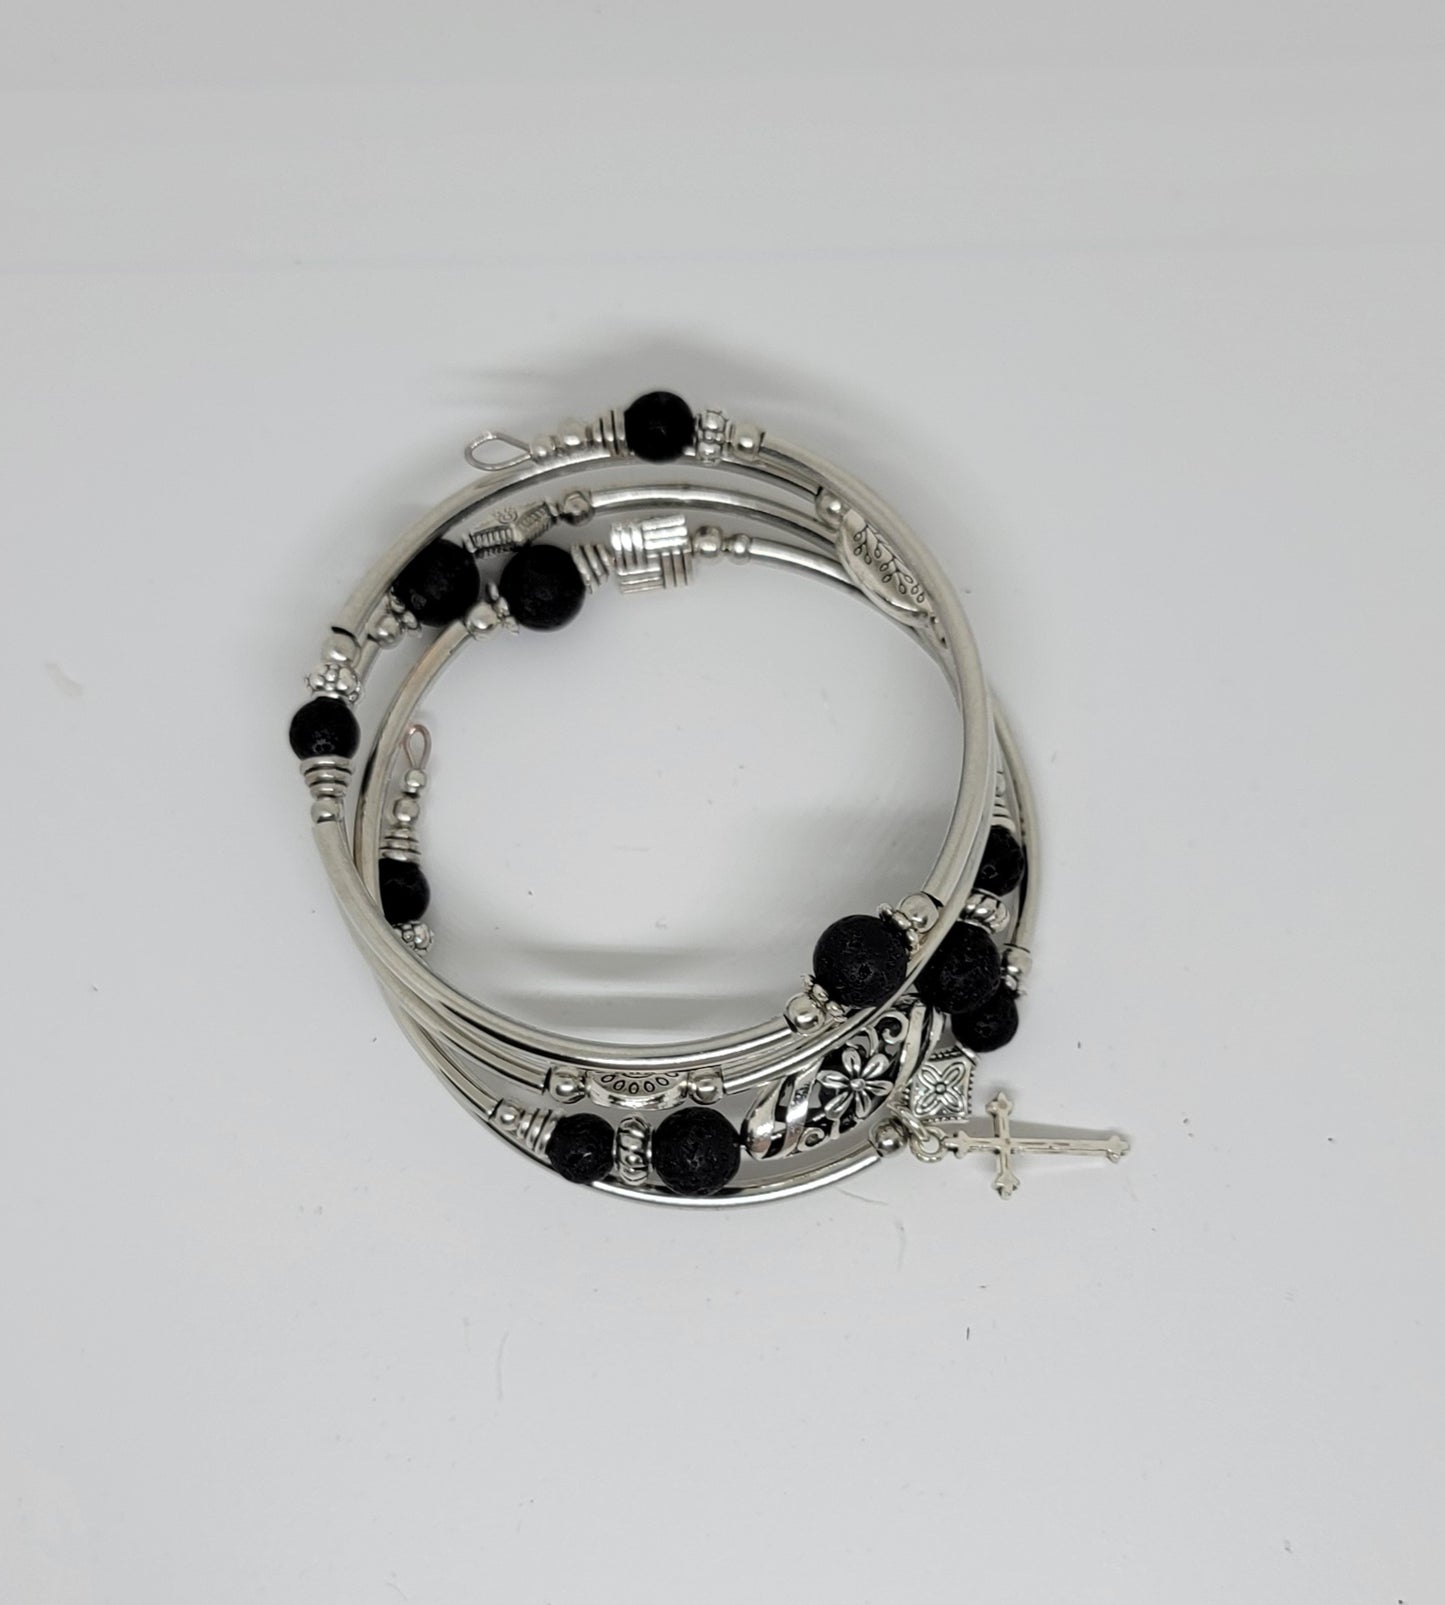 Black natural stone wrap bracelet with cross